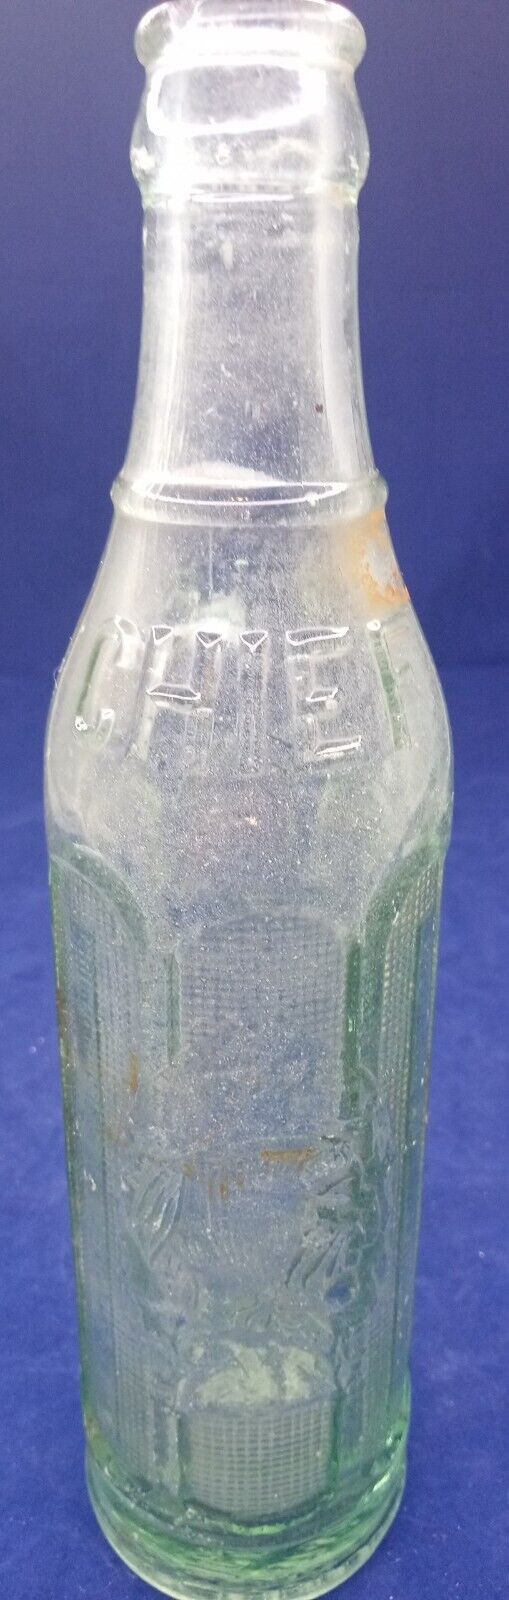 Vintage BIG CHIEF Indian Embossed Green Glass Soda Bottle, 8 oz? Coca-Cola 